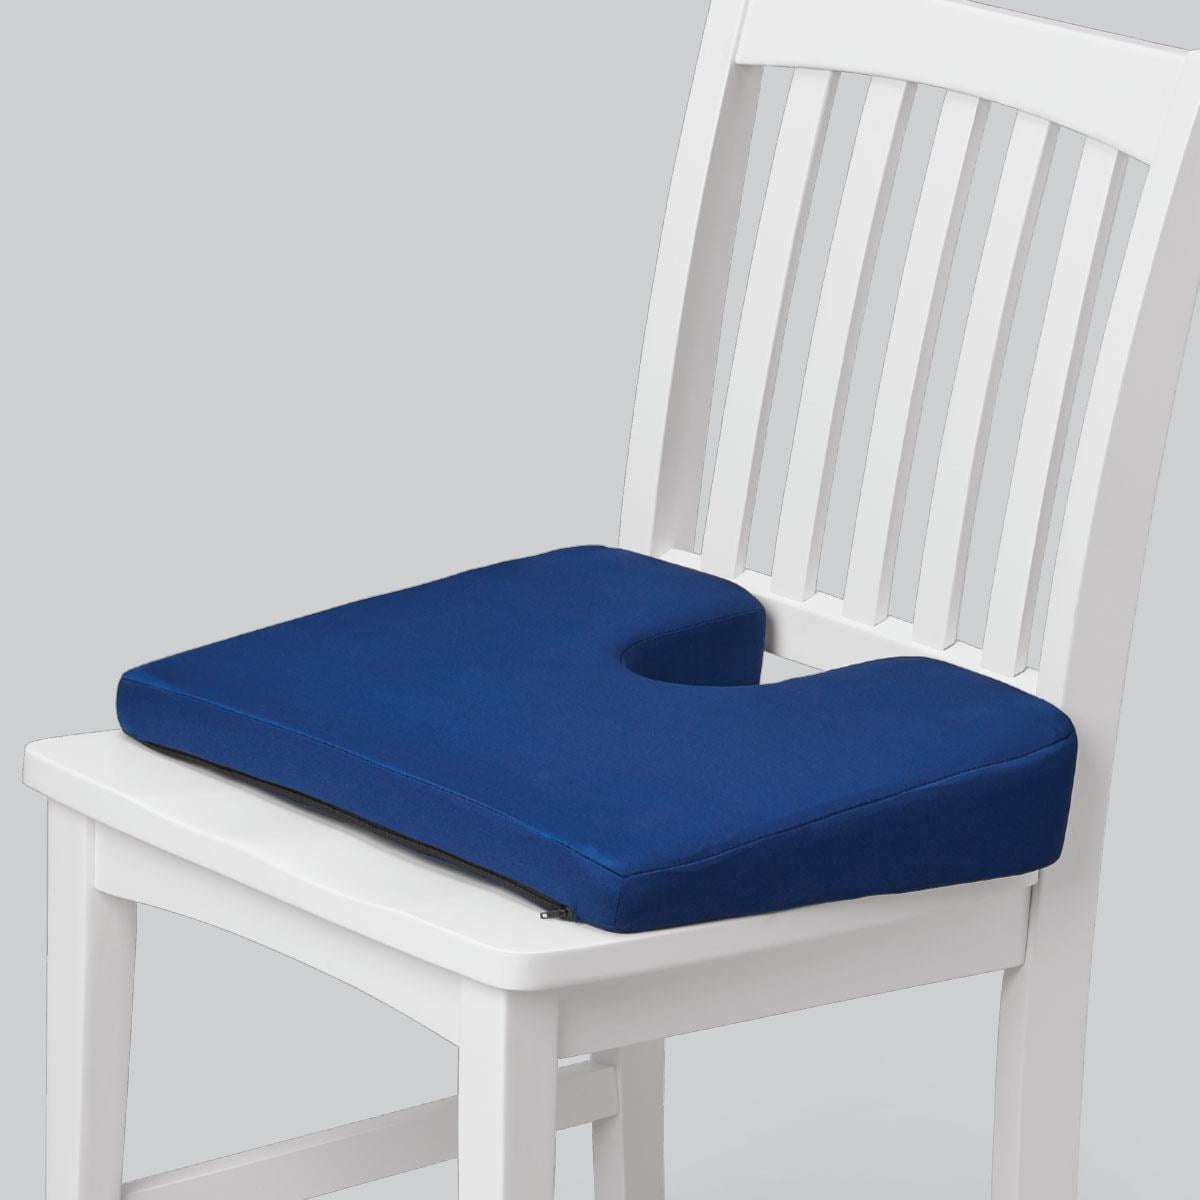 Premium HR Foam Coccyx Seat Cushion for Tailbone Pain Relief, Size